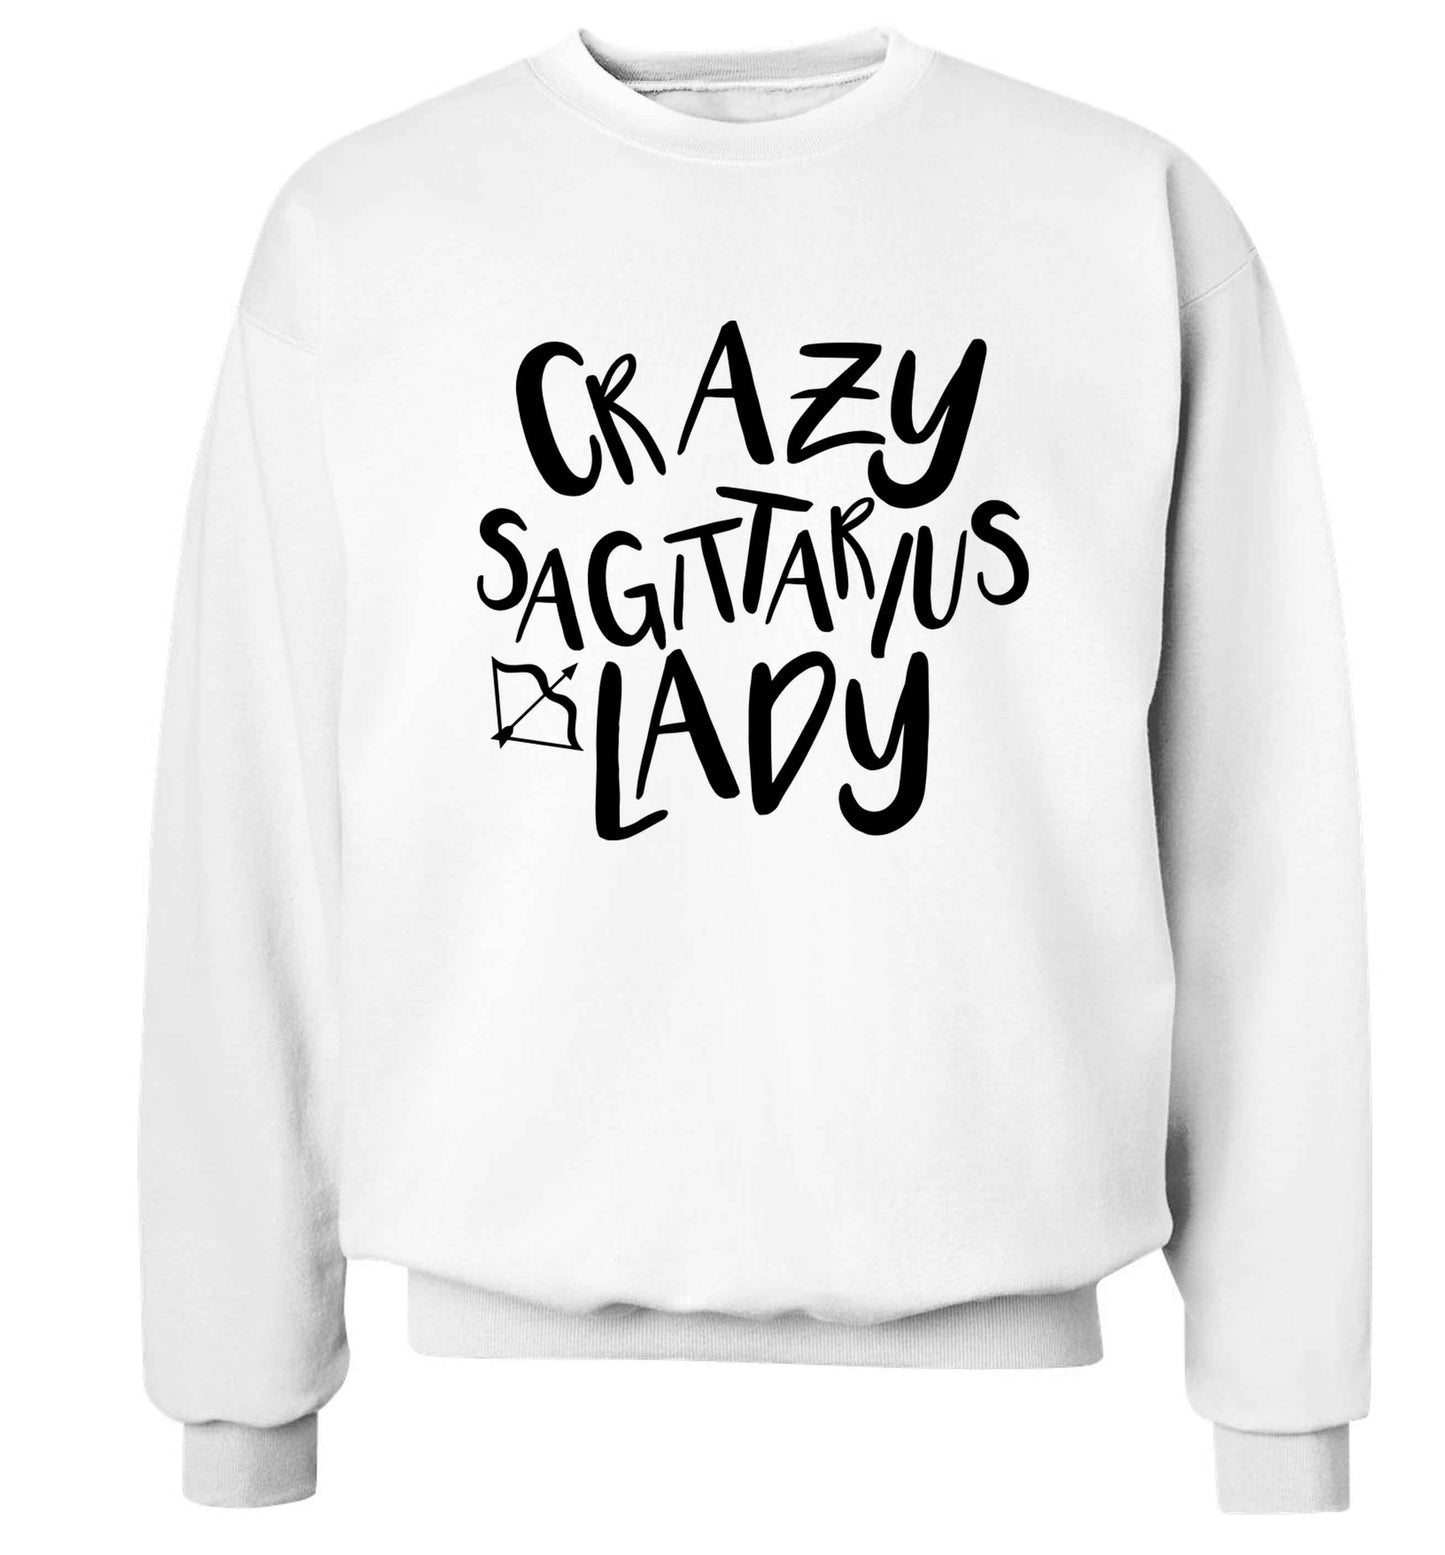 Crazy sagittarius lady Adult's unisex white Sweater 2XL